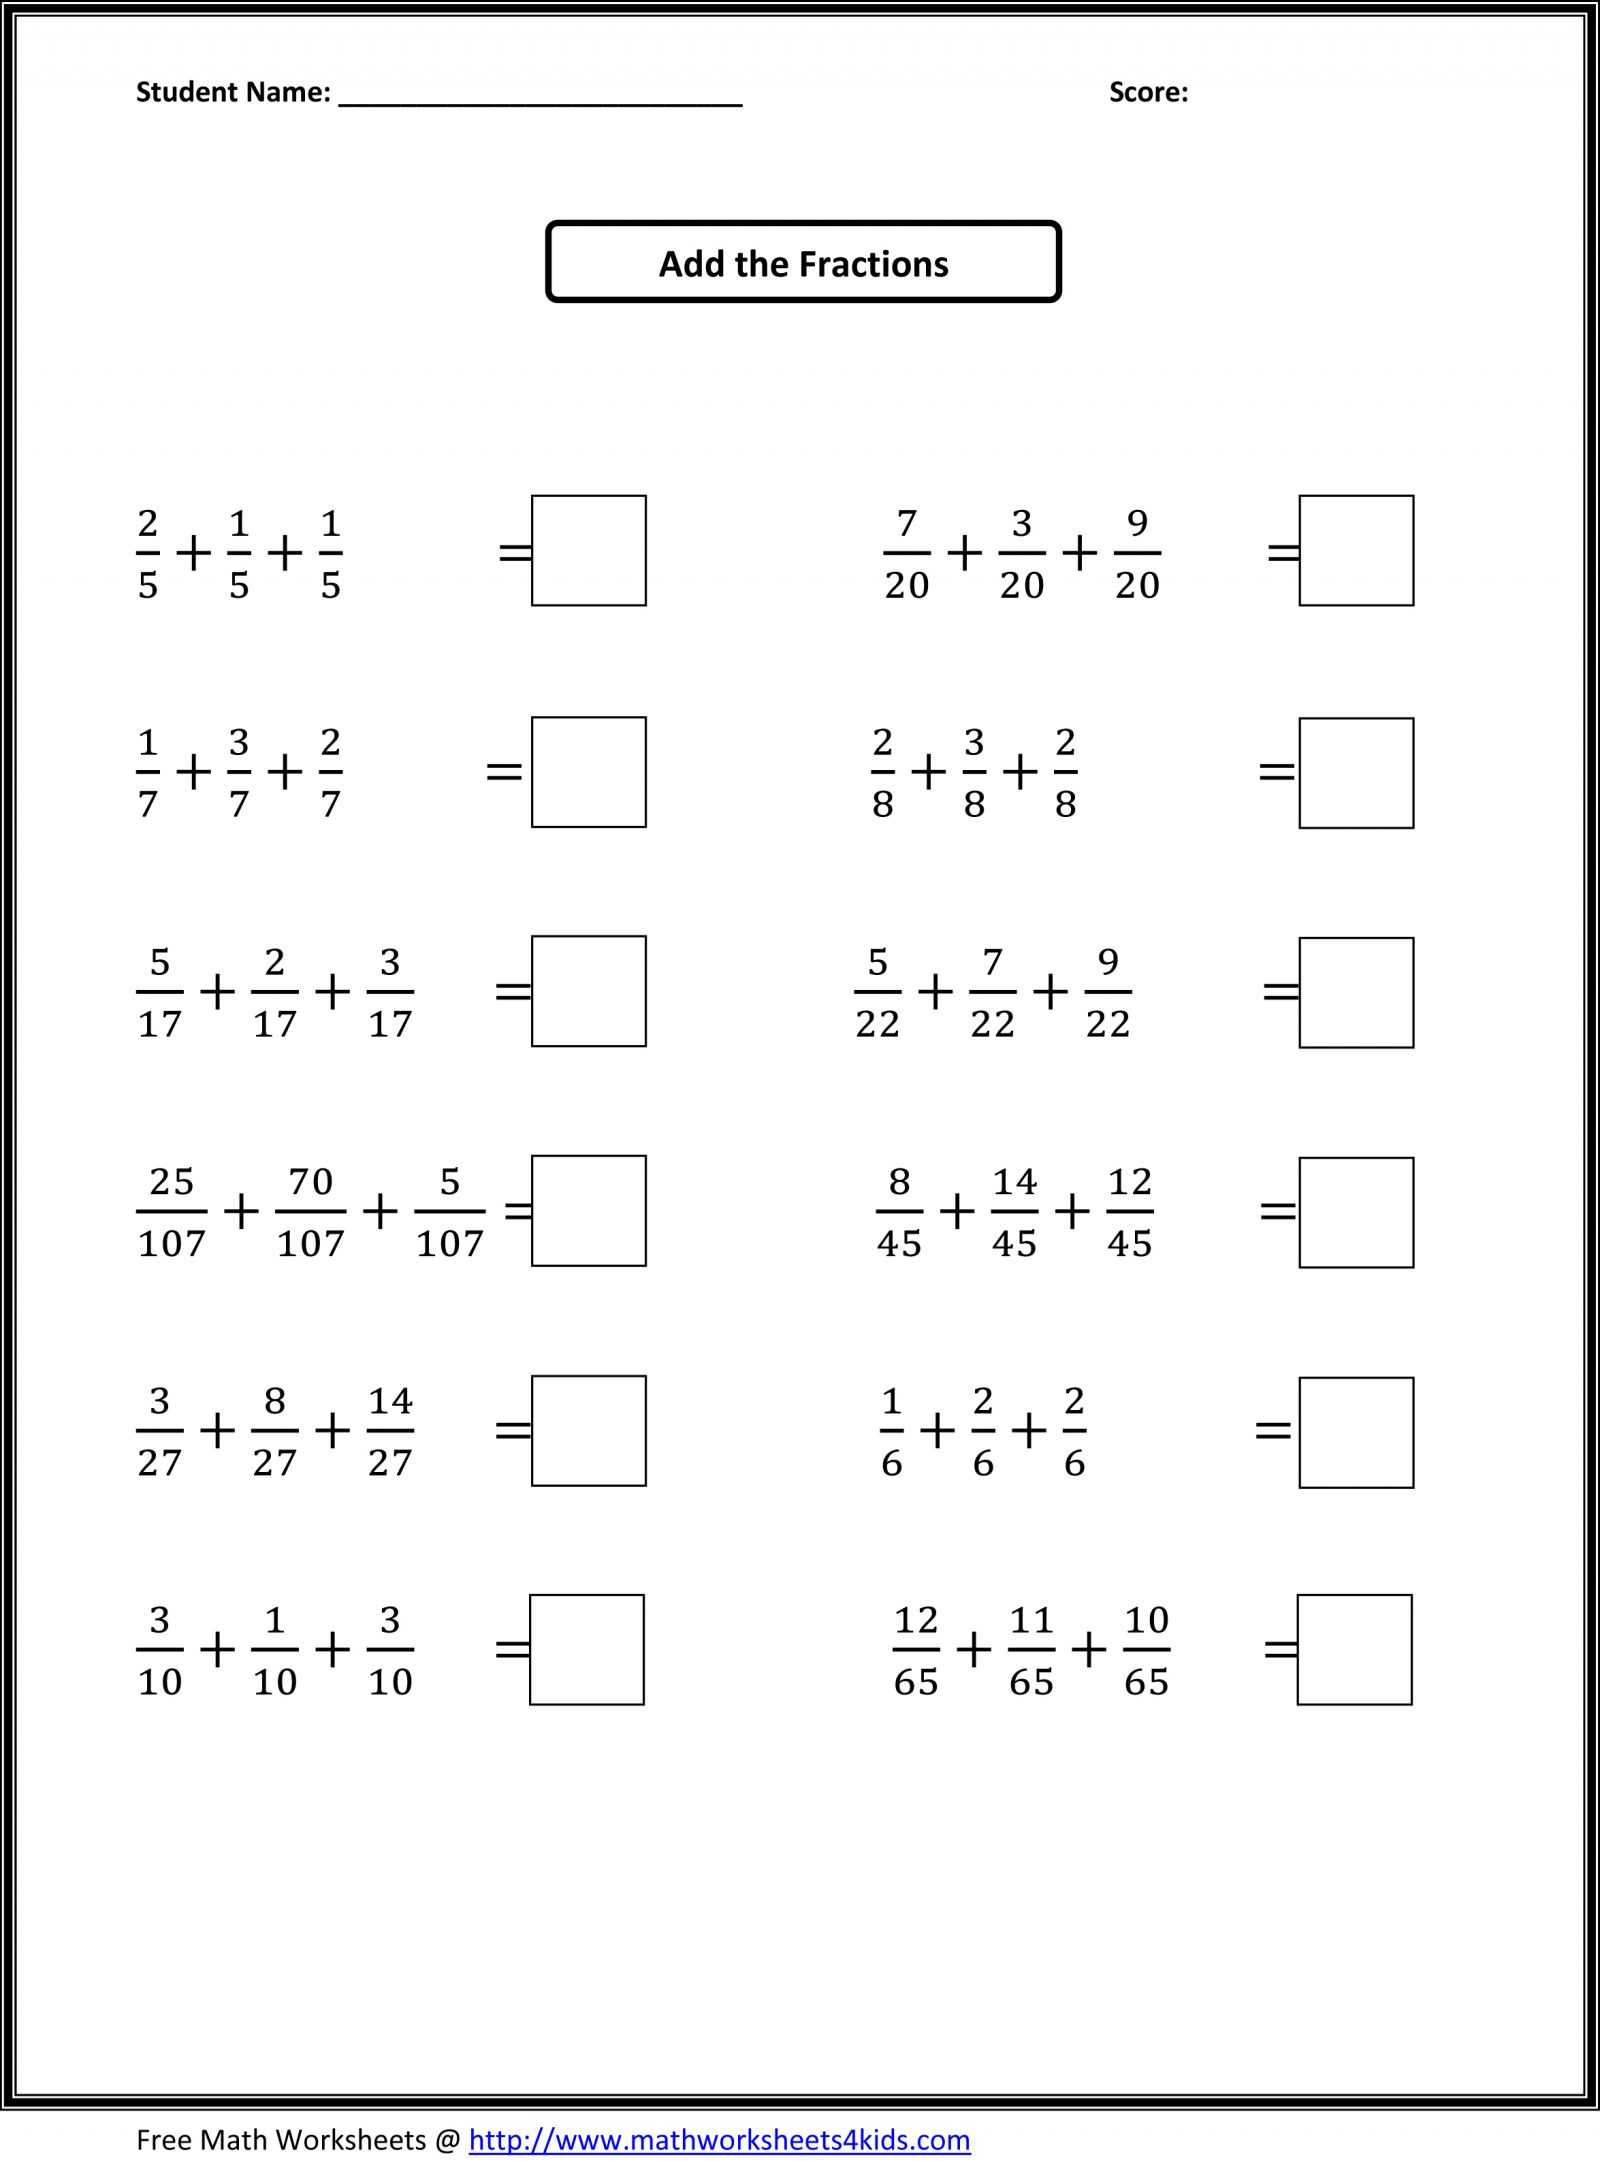 Life Skills Worksheets Pdf as Well as Kindergarten Math Worksheetor 4th Grade Sheets Divisionun